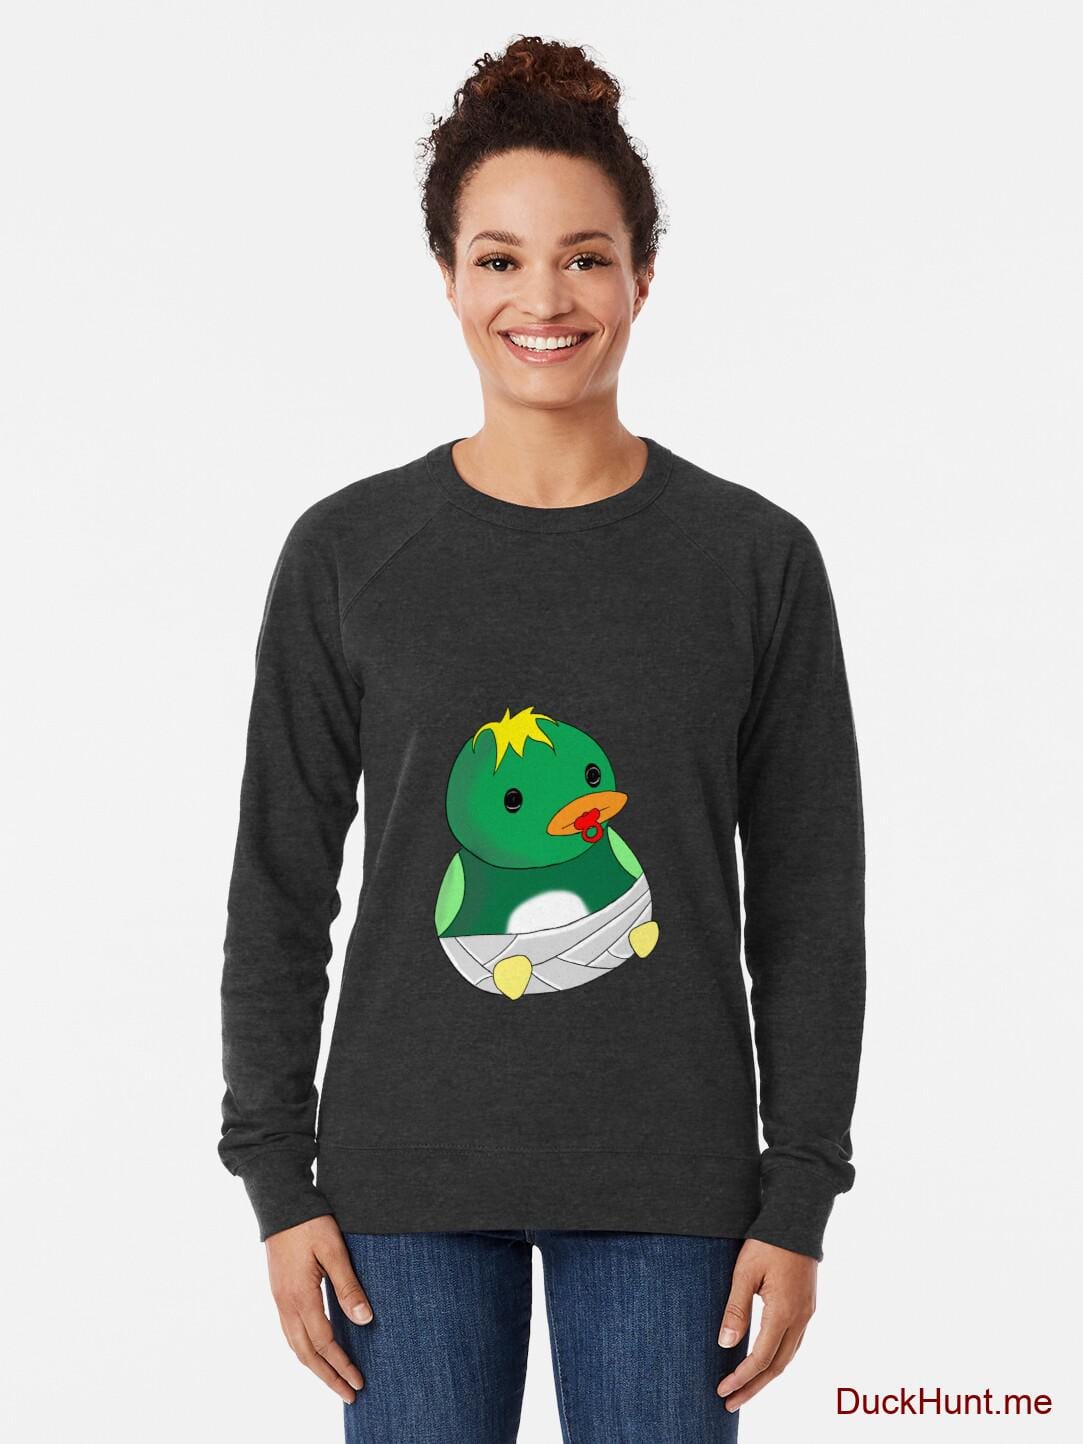 Baby duck Charcoal Lightweight Sweatshirt alternative image 1